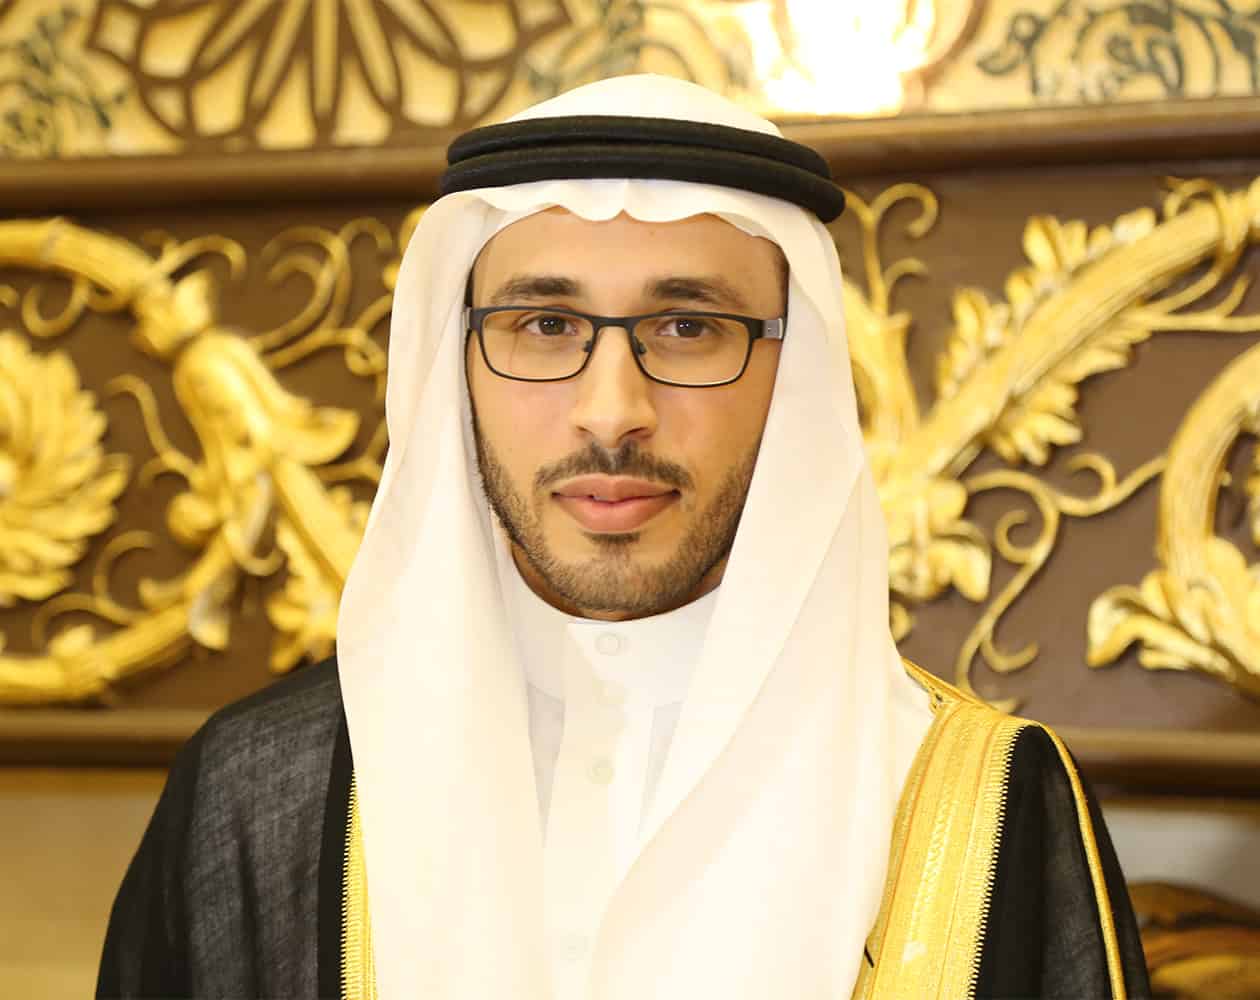 Ahmad AlMaiman, Chief Information Officer